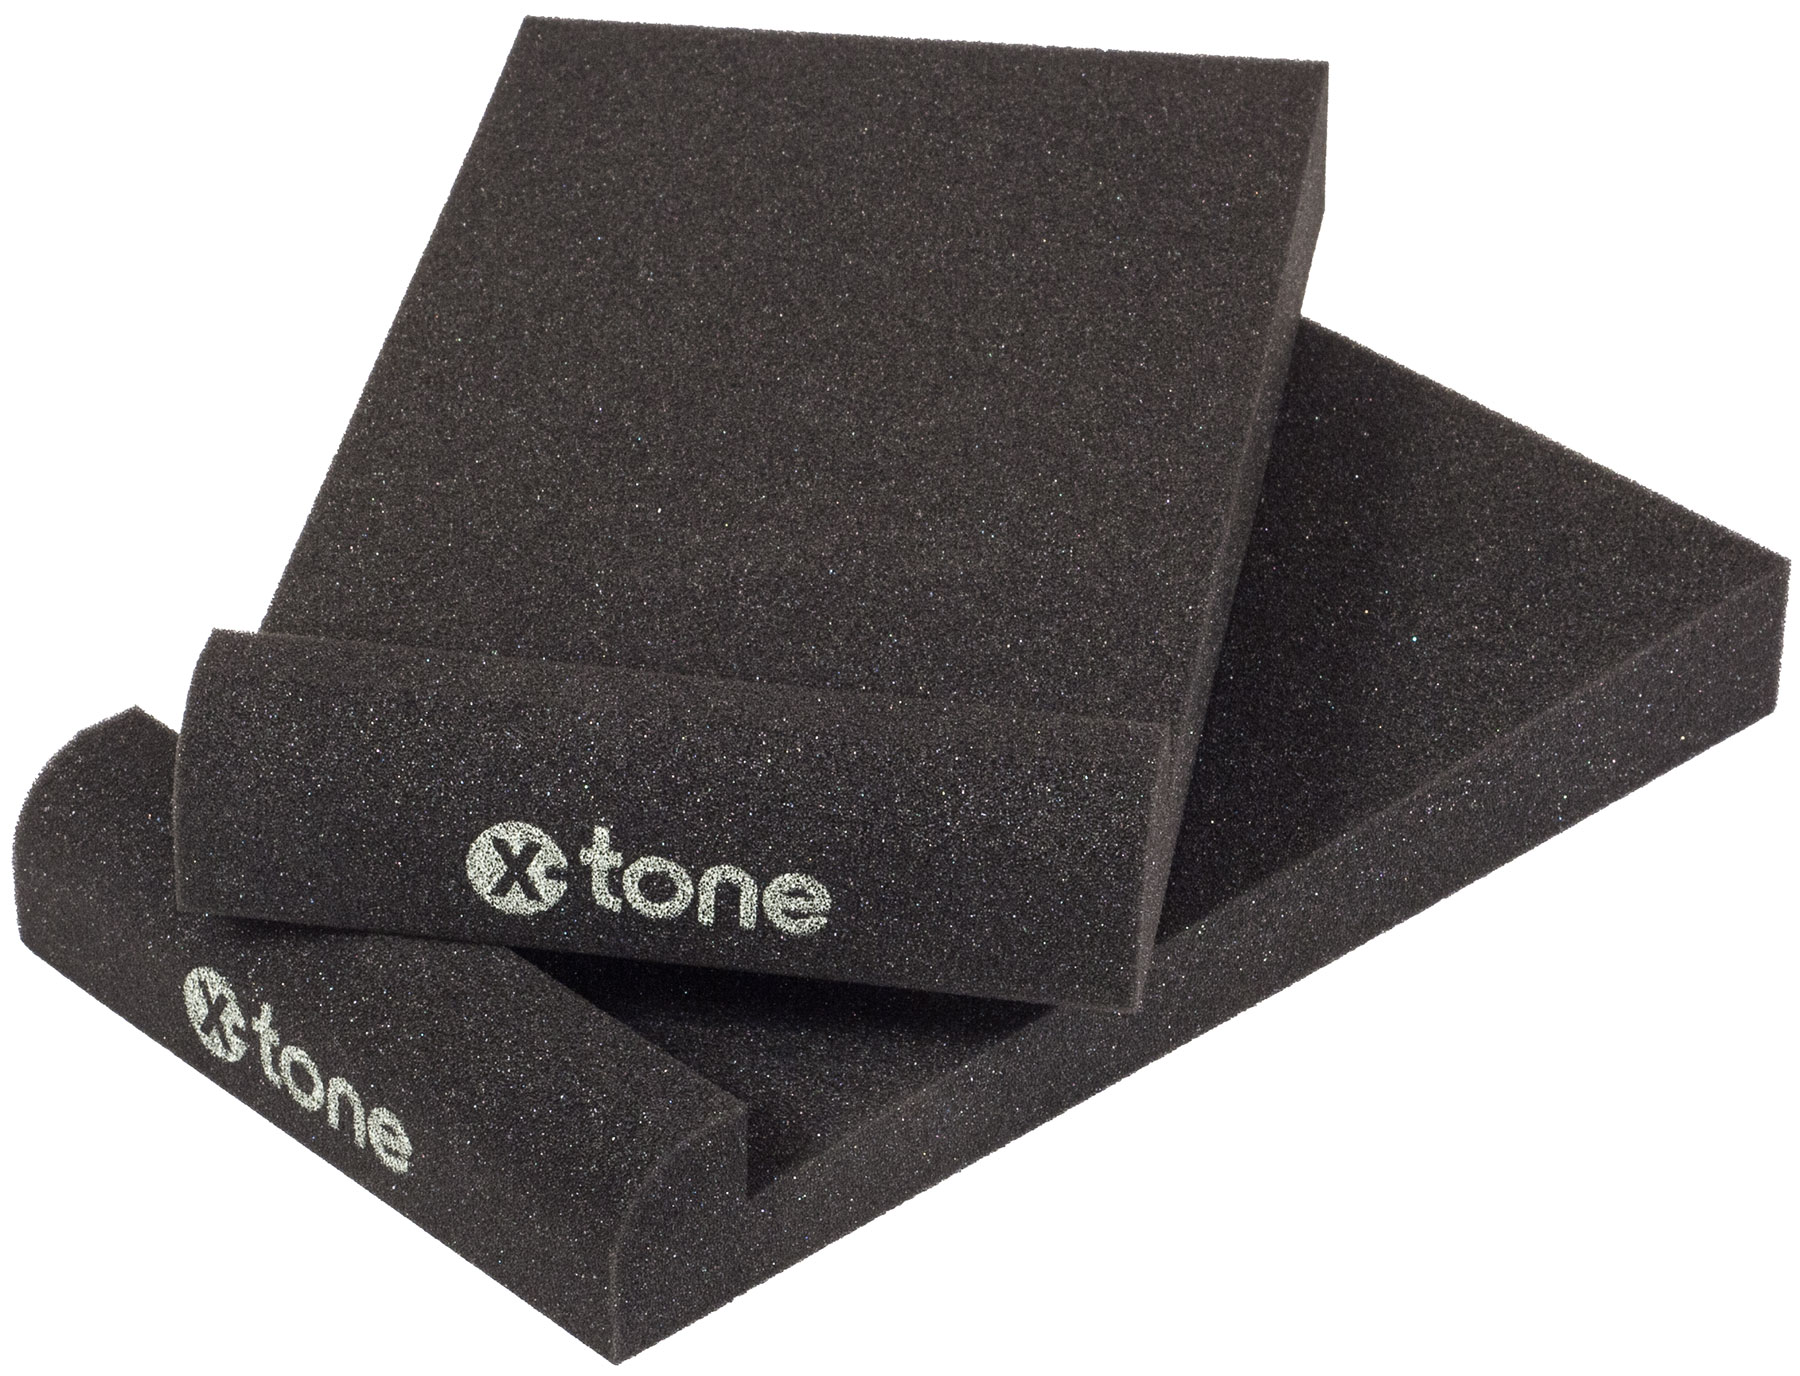 X-tone Xi 7000 Mousse Isolante Moniteurs (paire) - Speakers pads - Variation 1